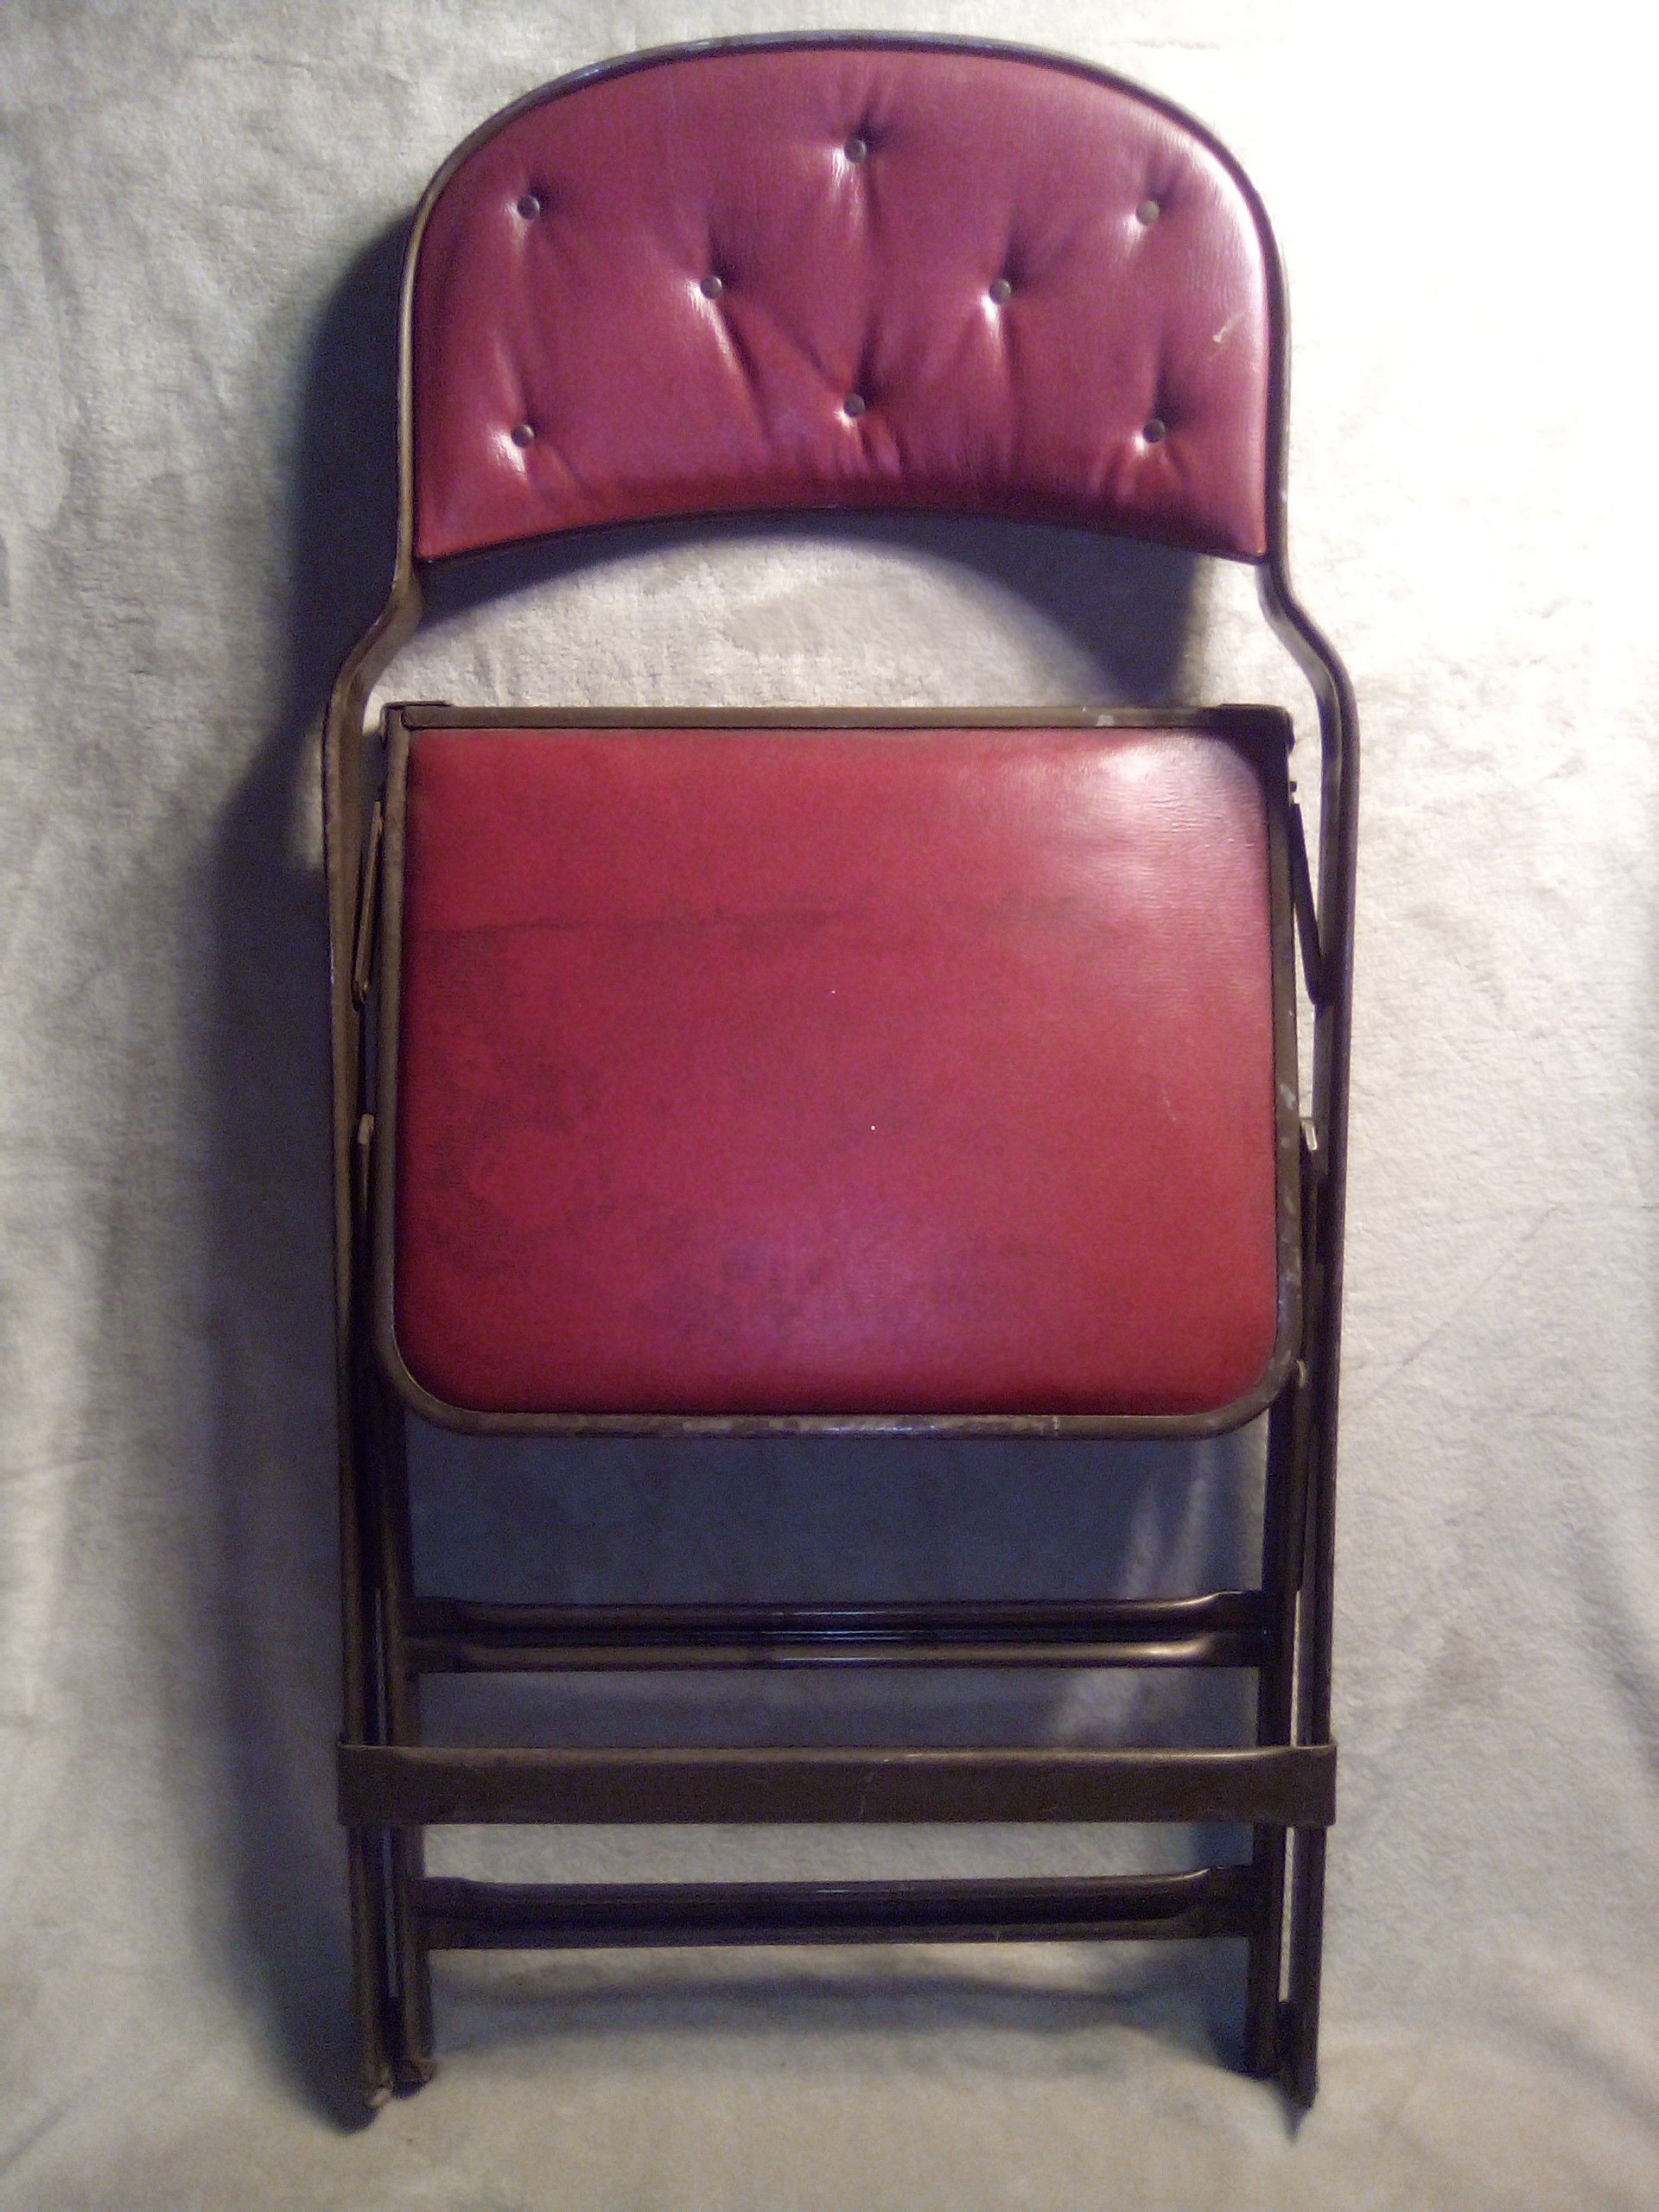 Antique clarin folding metal chair